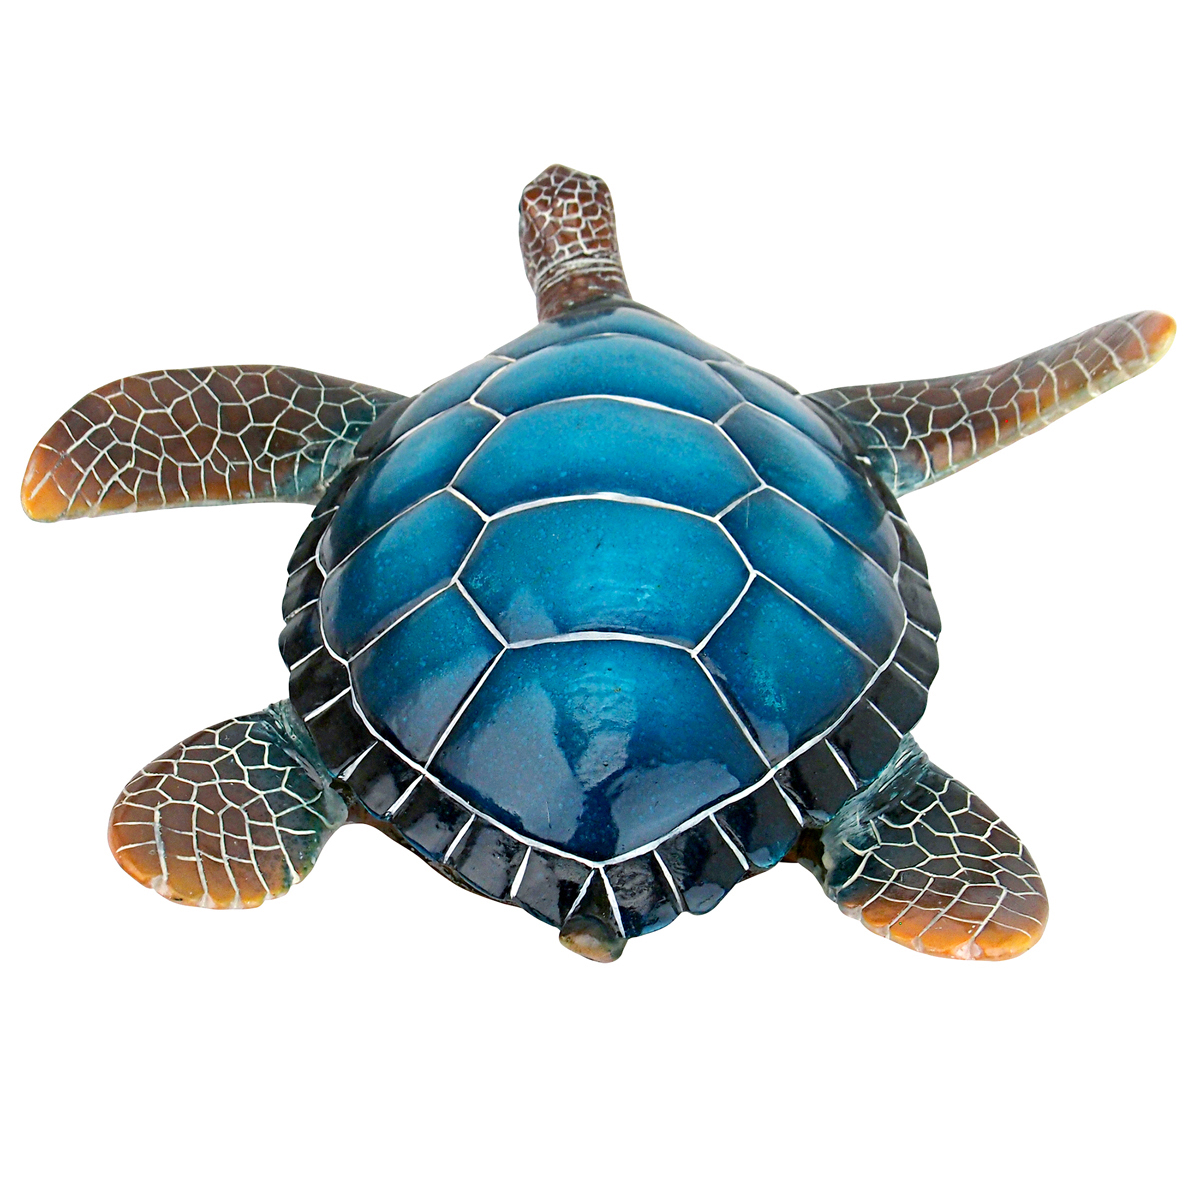 Image Thumbnail for Large Blue Sea Turtle Statue